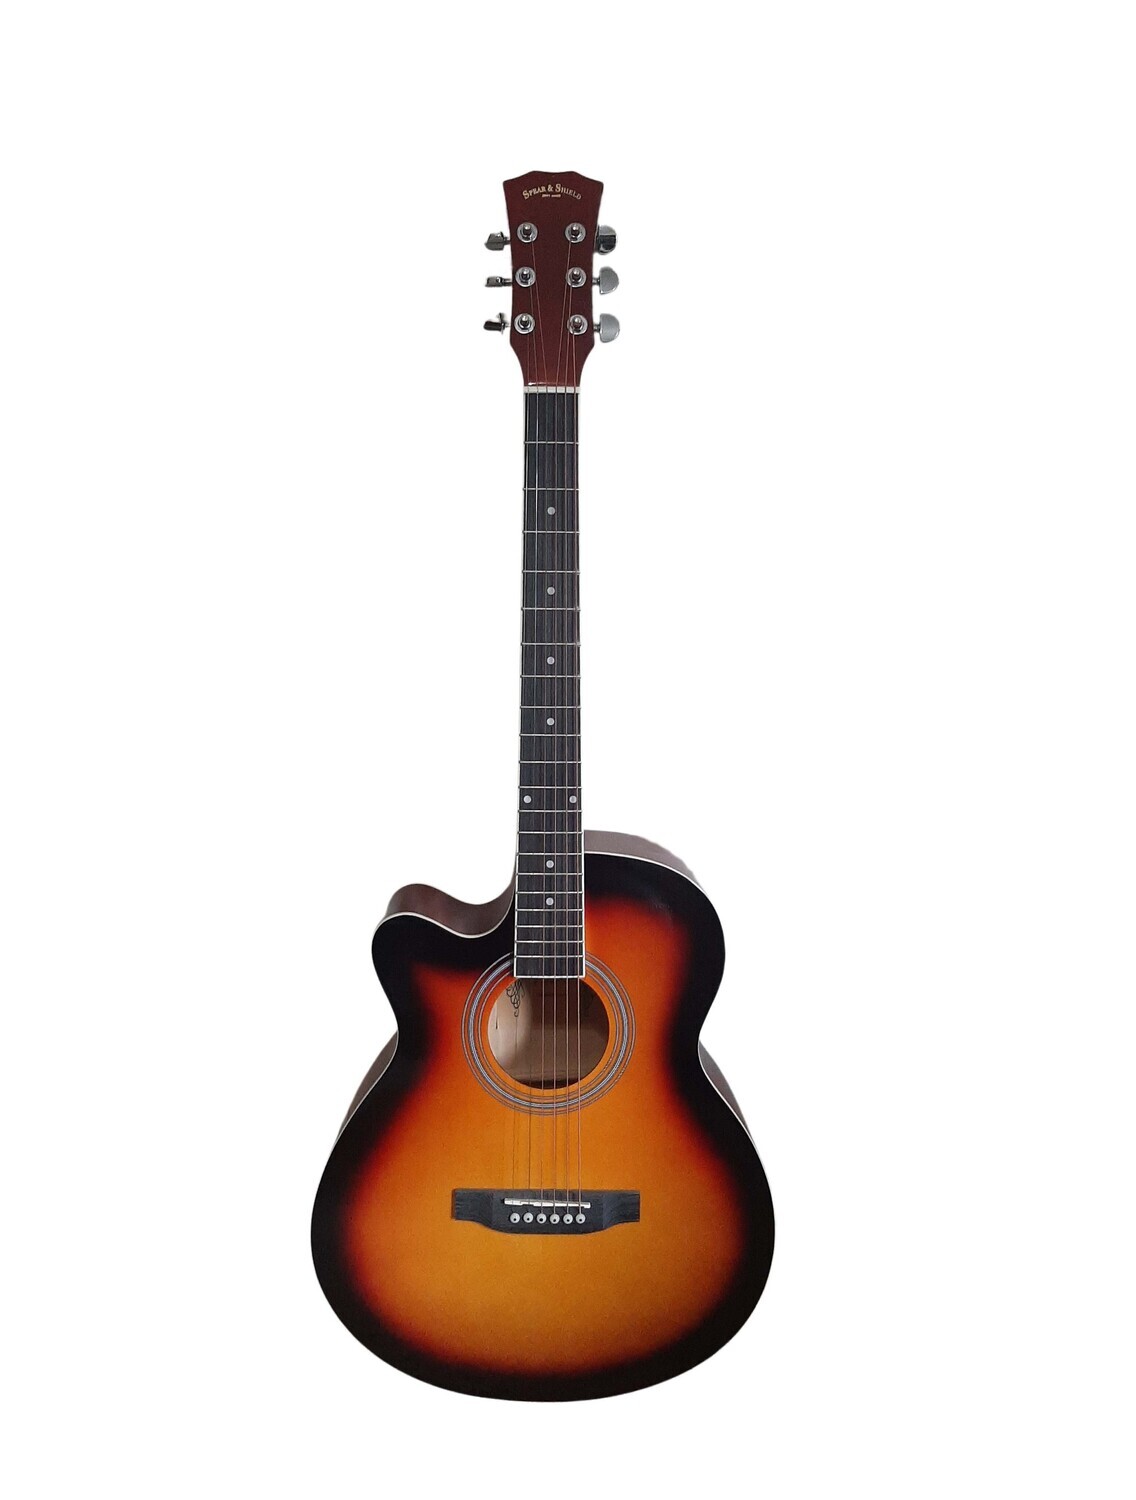 Minor Error-Spear &amp; Shield Left handed Acoustic Guitar for Beginners Adults Students 40-inch Full-size Sunburst SPS376LF